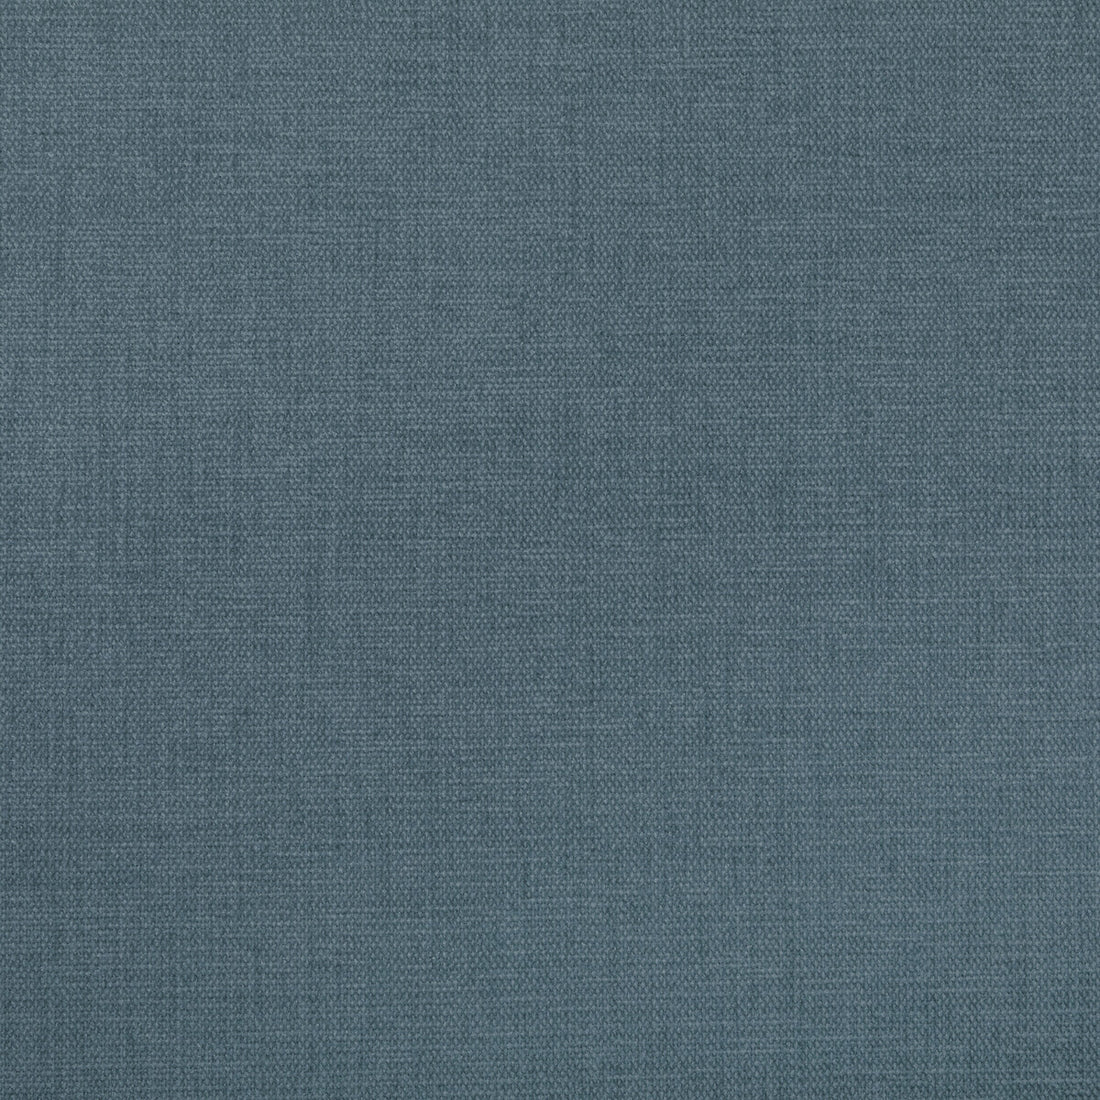 Kravet Smart fabric in 34959-1515 color - pattern 34959.1515.0 - by Kravet Smart in the Performance Kravetarmor collection